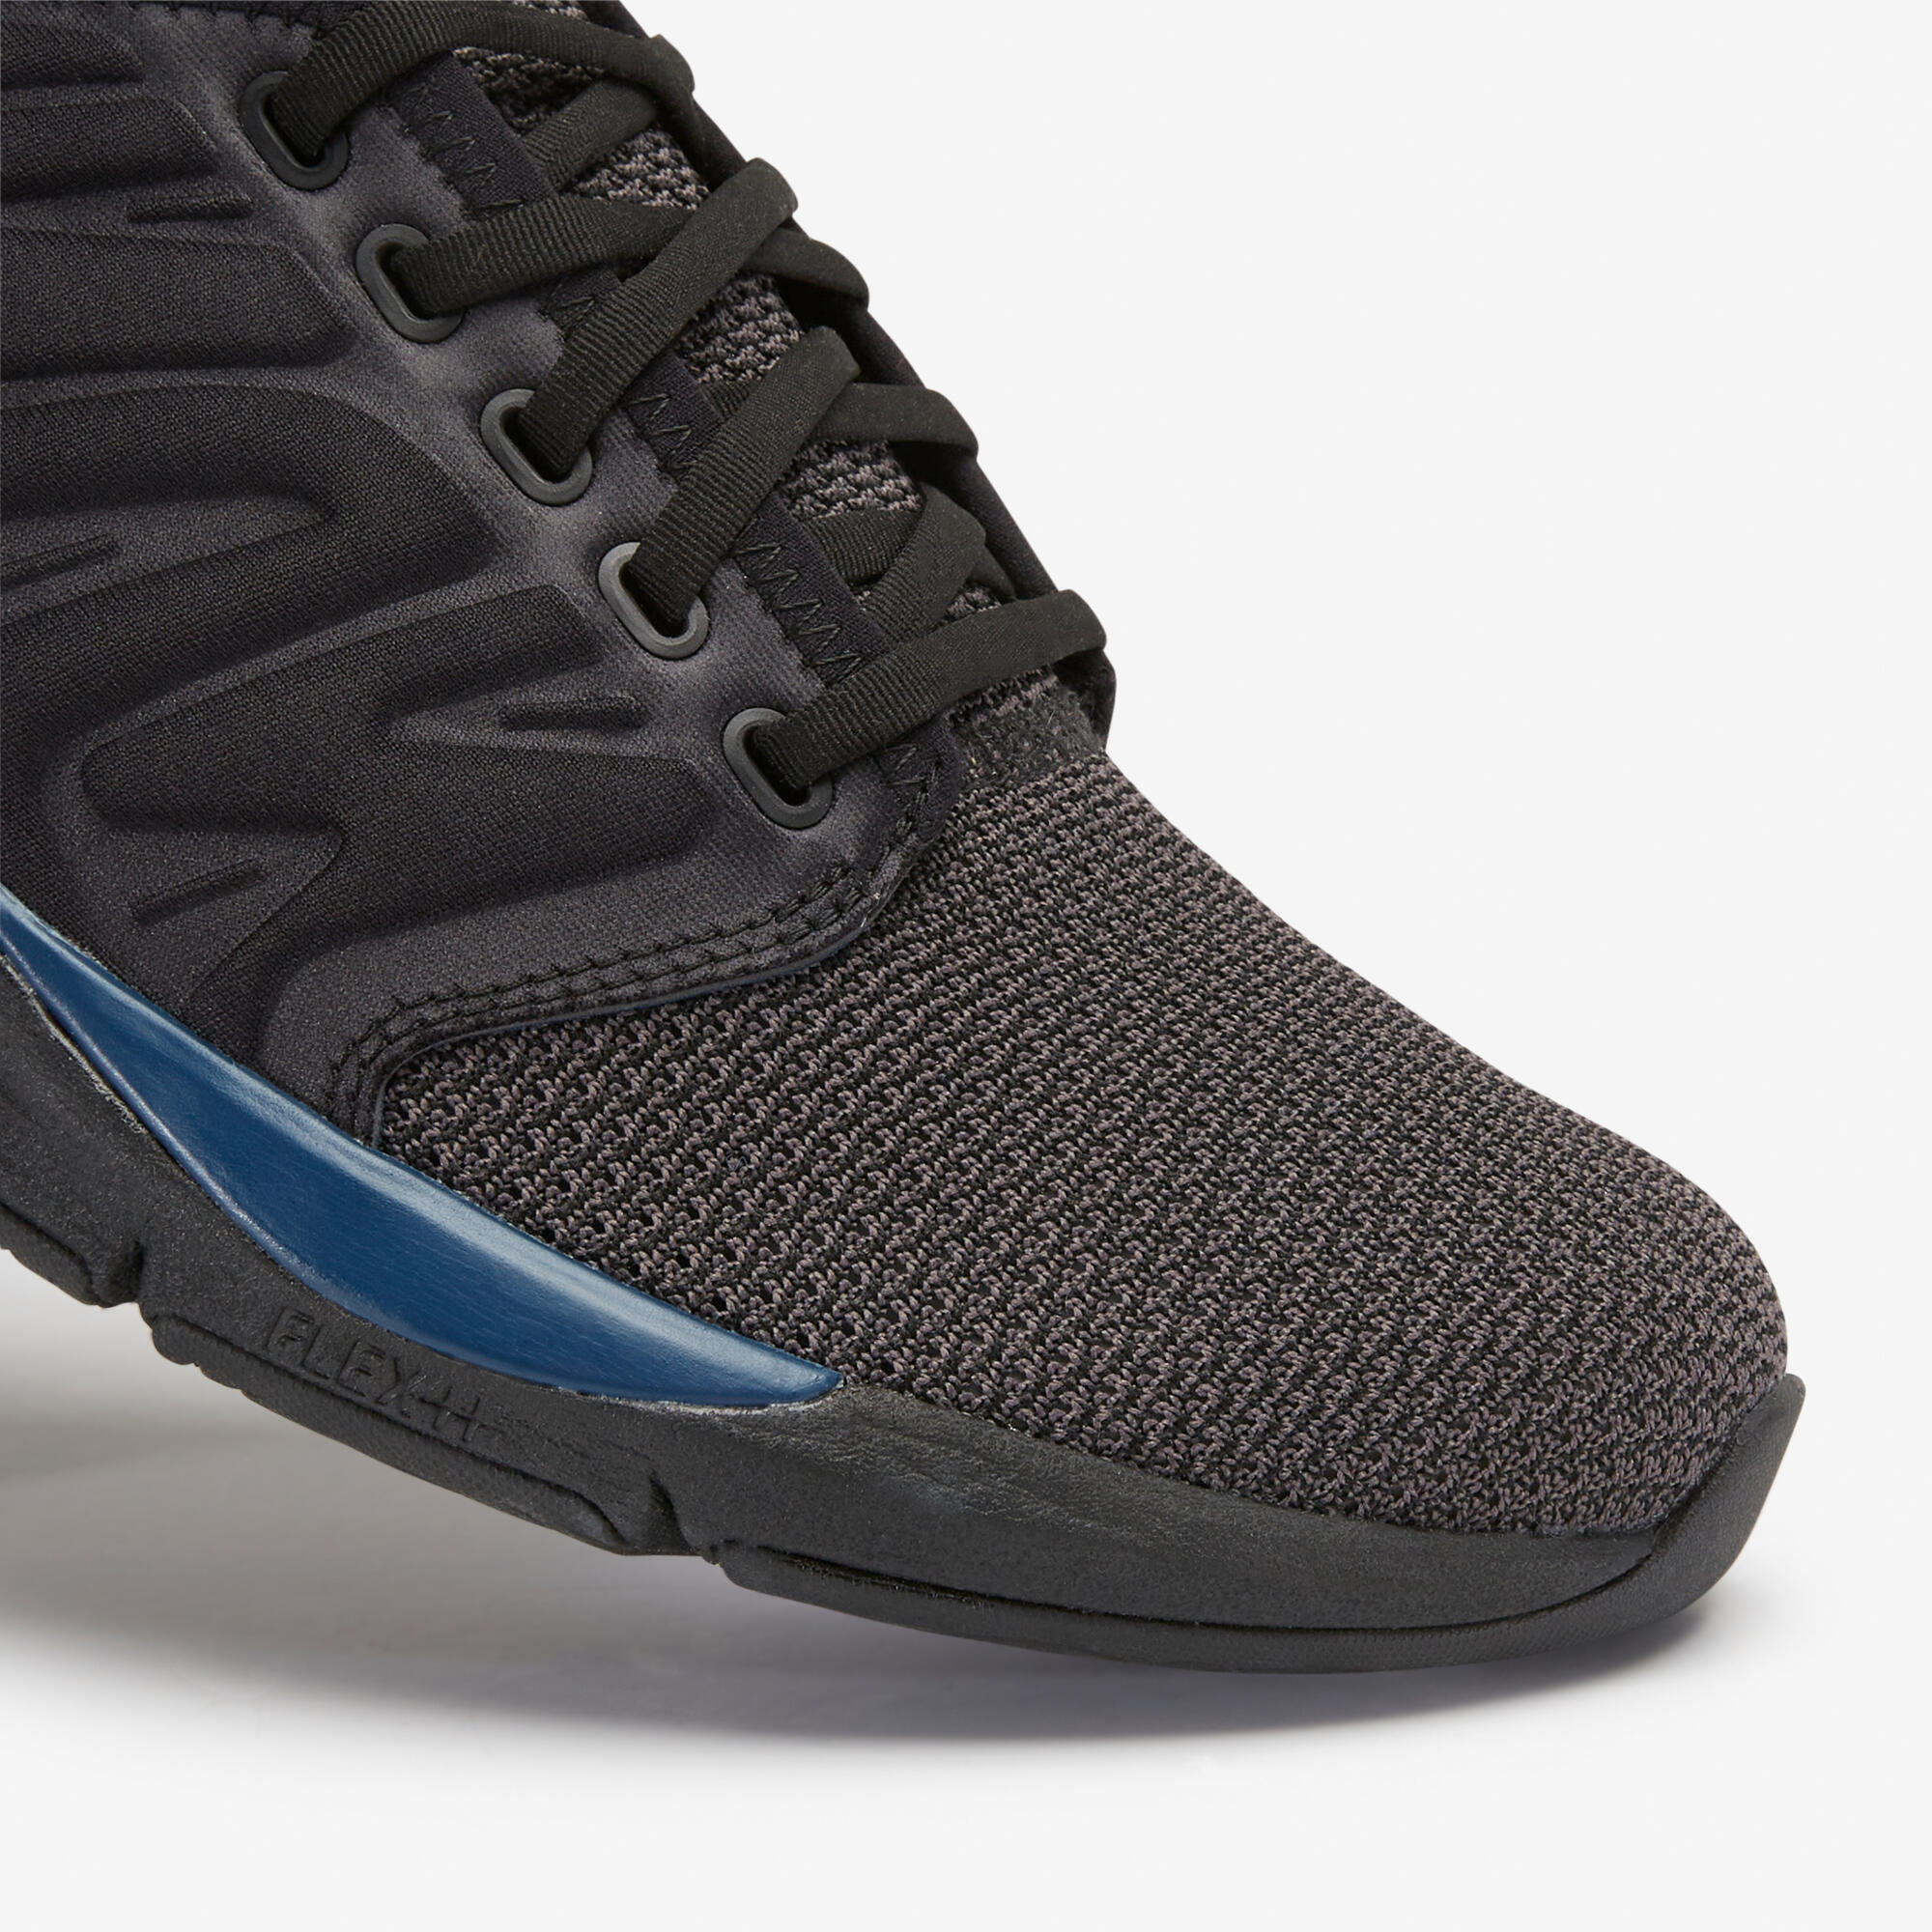 Fitness Walking Shoes Sportwalk Comfort - black/blue 4/7